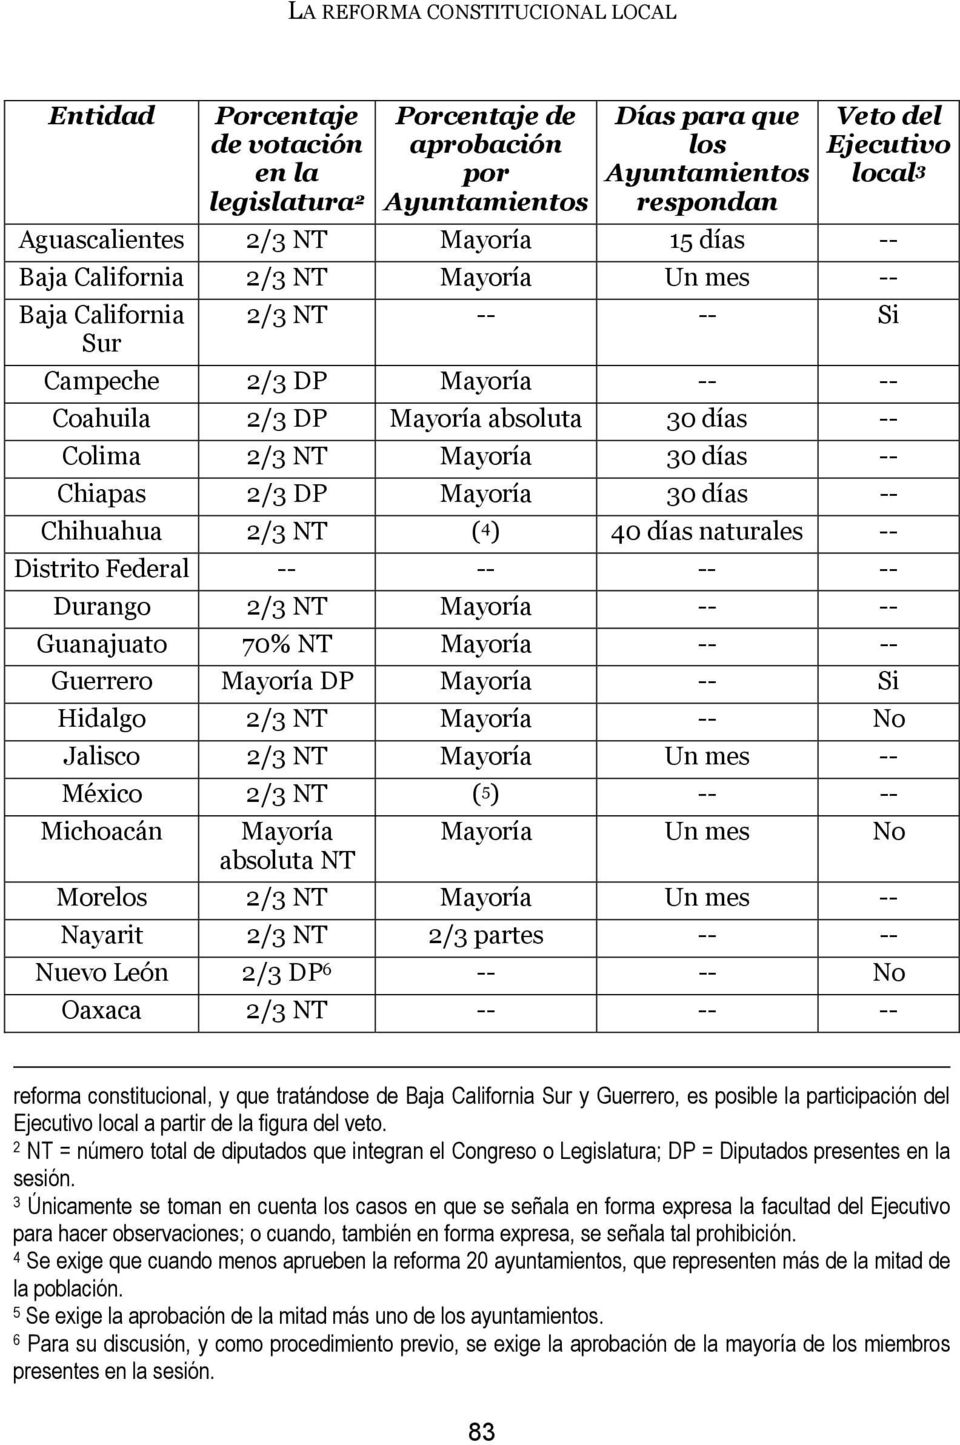 2/3 NT Mayoría 30 días -- Chiapas 2/3 DP Mayoría 30 días -- Chihuahua 2/3 NT ( 4 ) 40 días naturales -- Distrito Federal -- -- -- -- Durango 2/3 NT Mayoría -- -- Guanajuato 70% NT Mayoría -- --